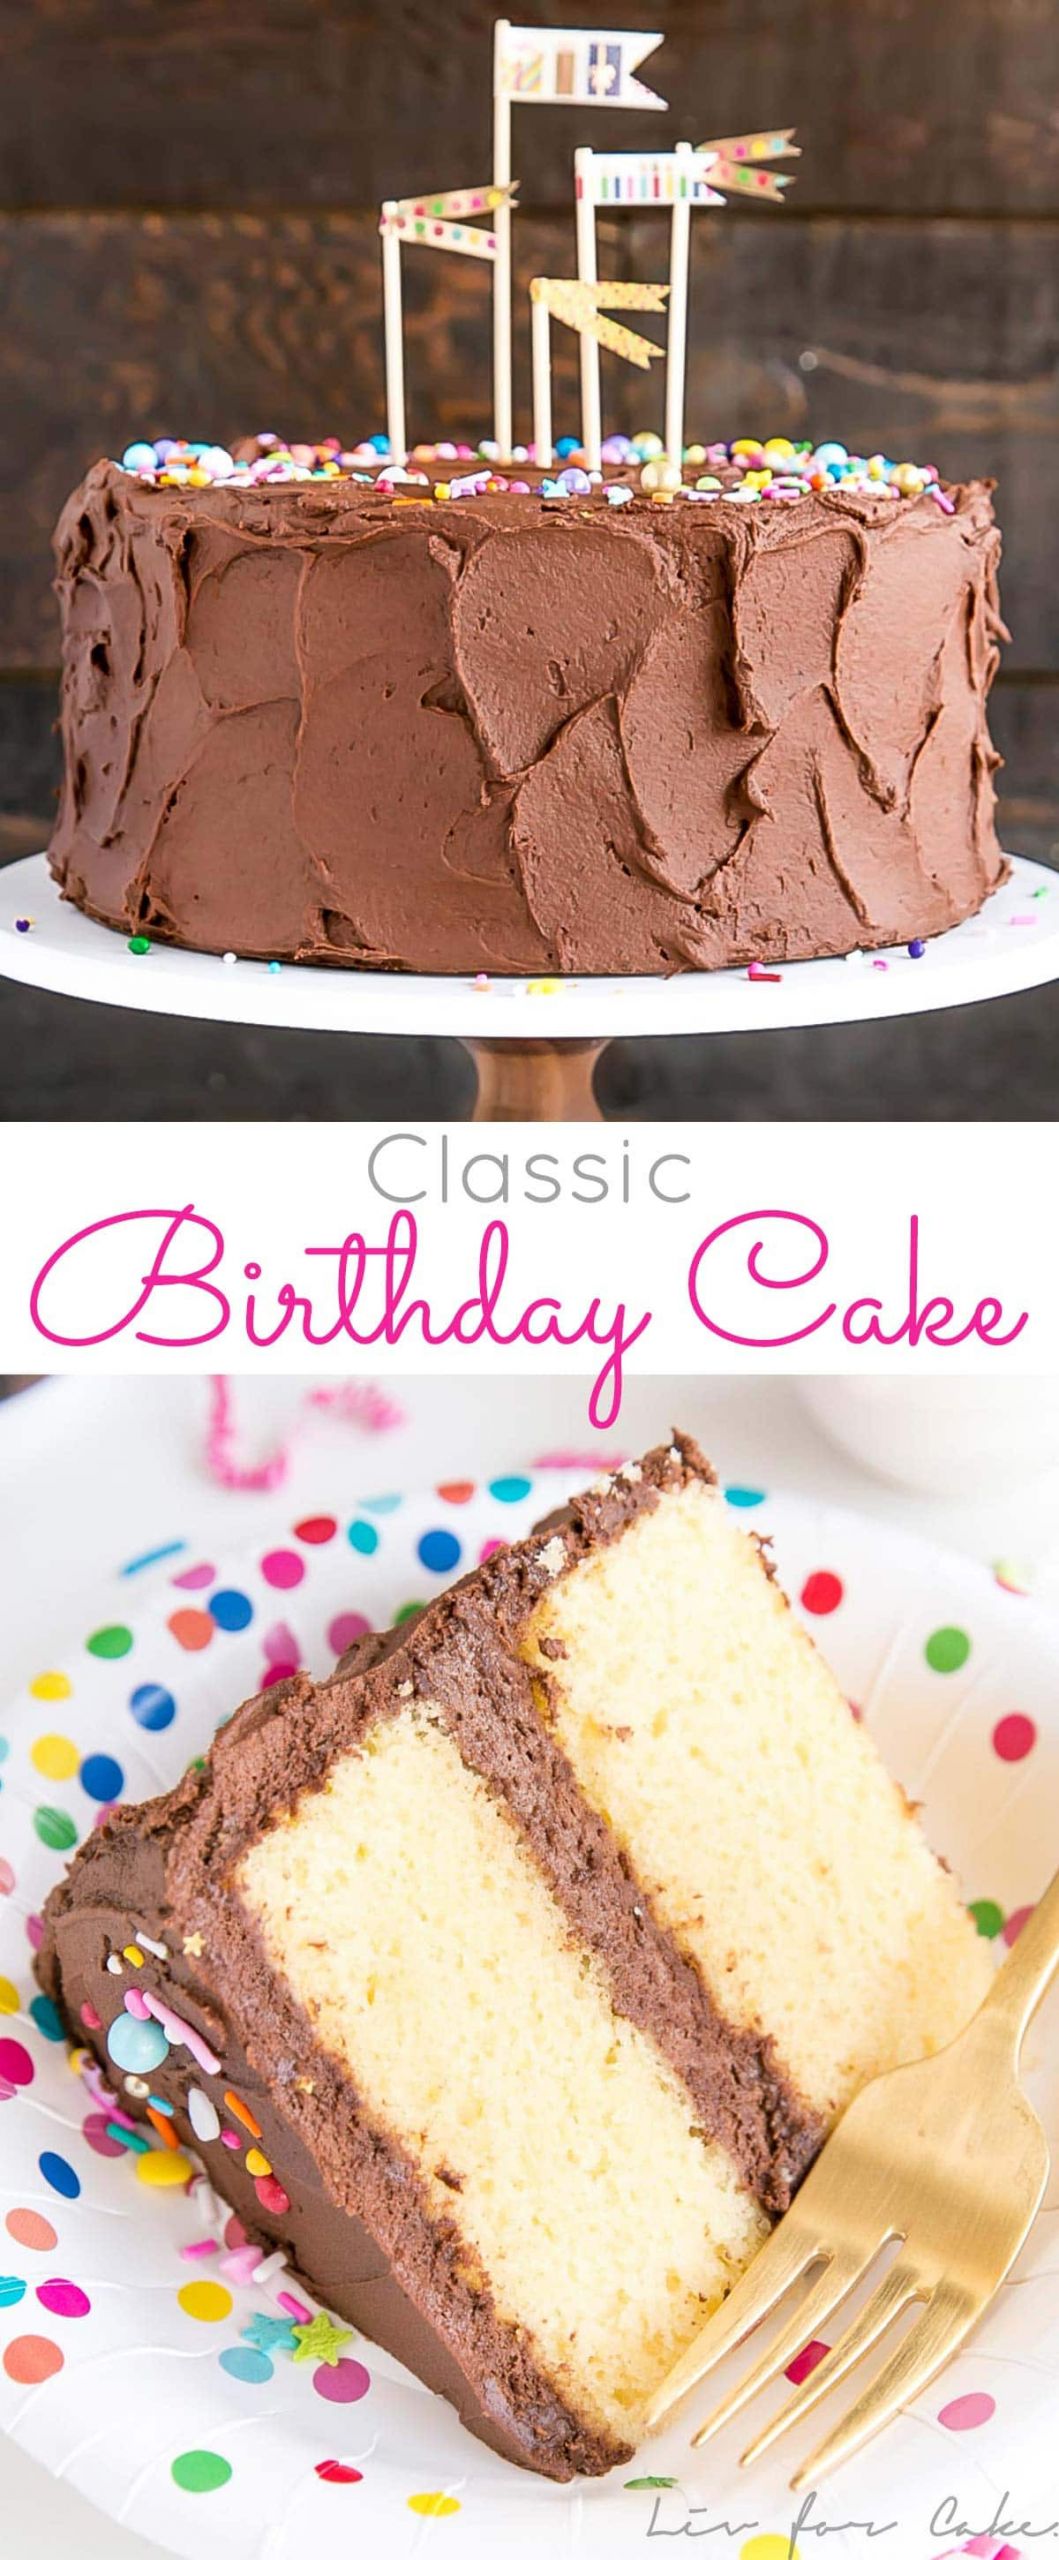 Classic Birthday Cake Recipes
 Classic Birthday Cake